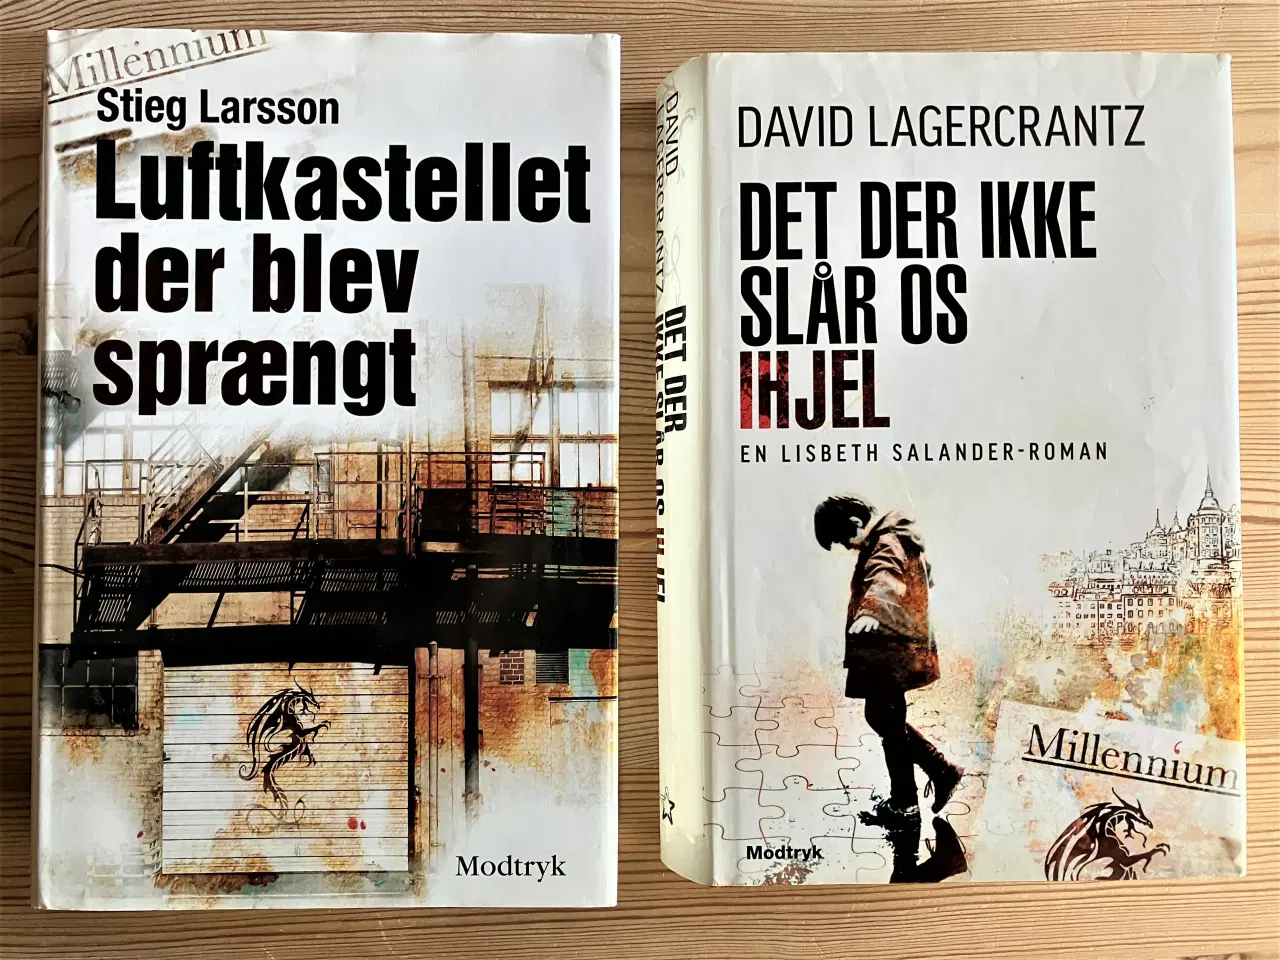 Billede 1 - Stieg Larsson og David Lagercrantz